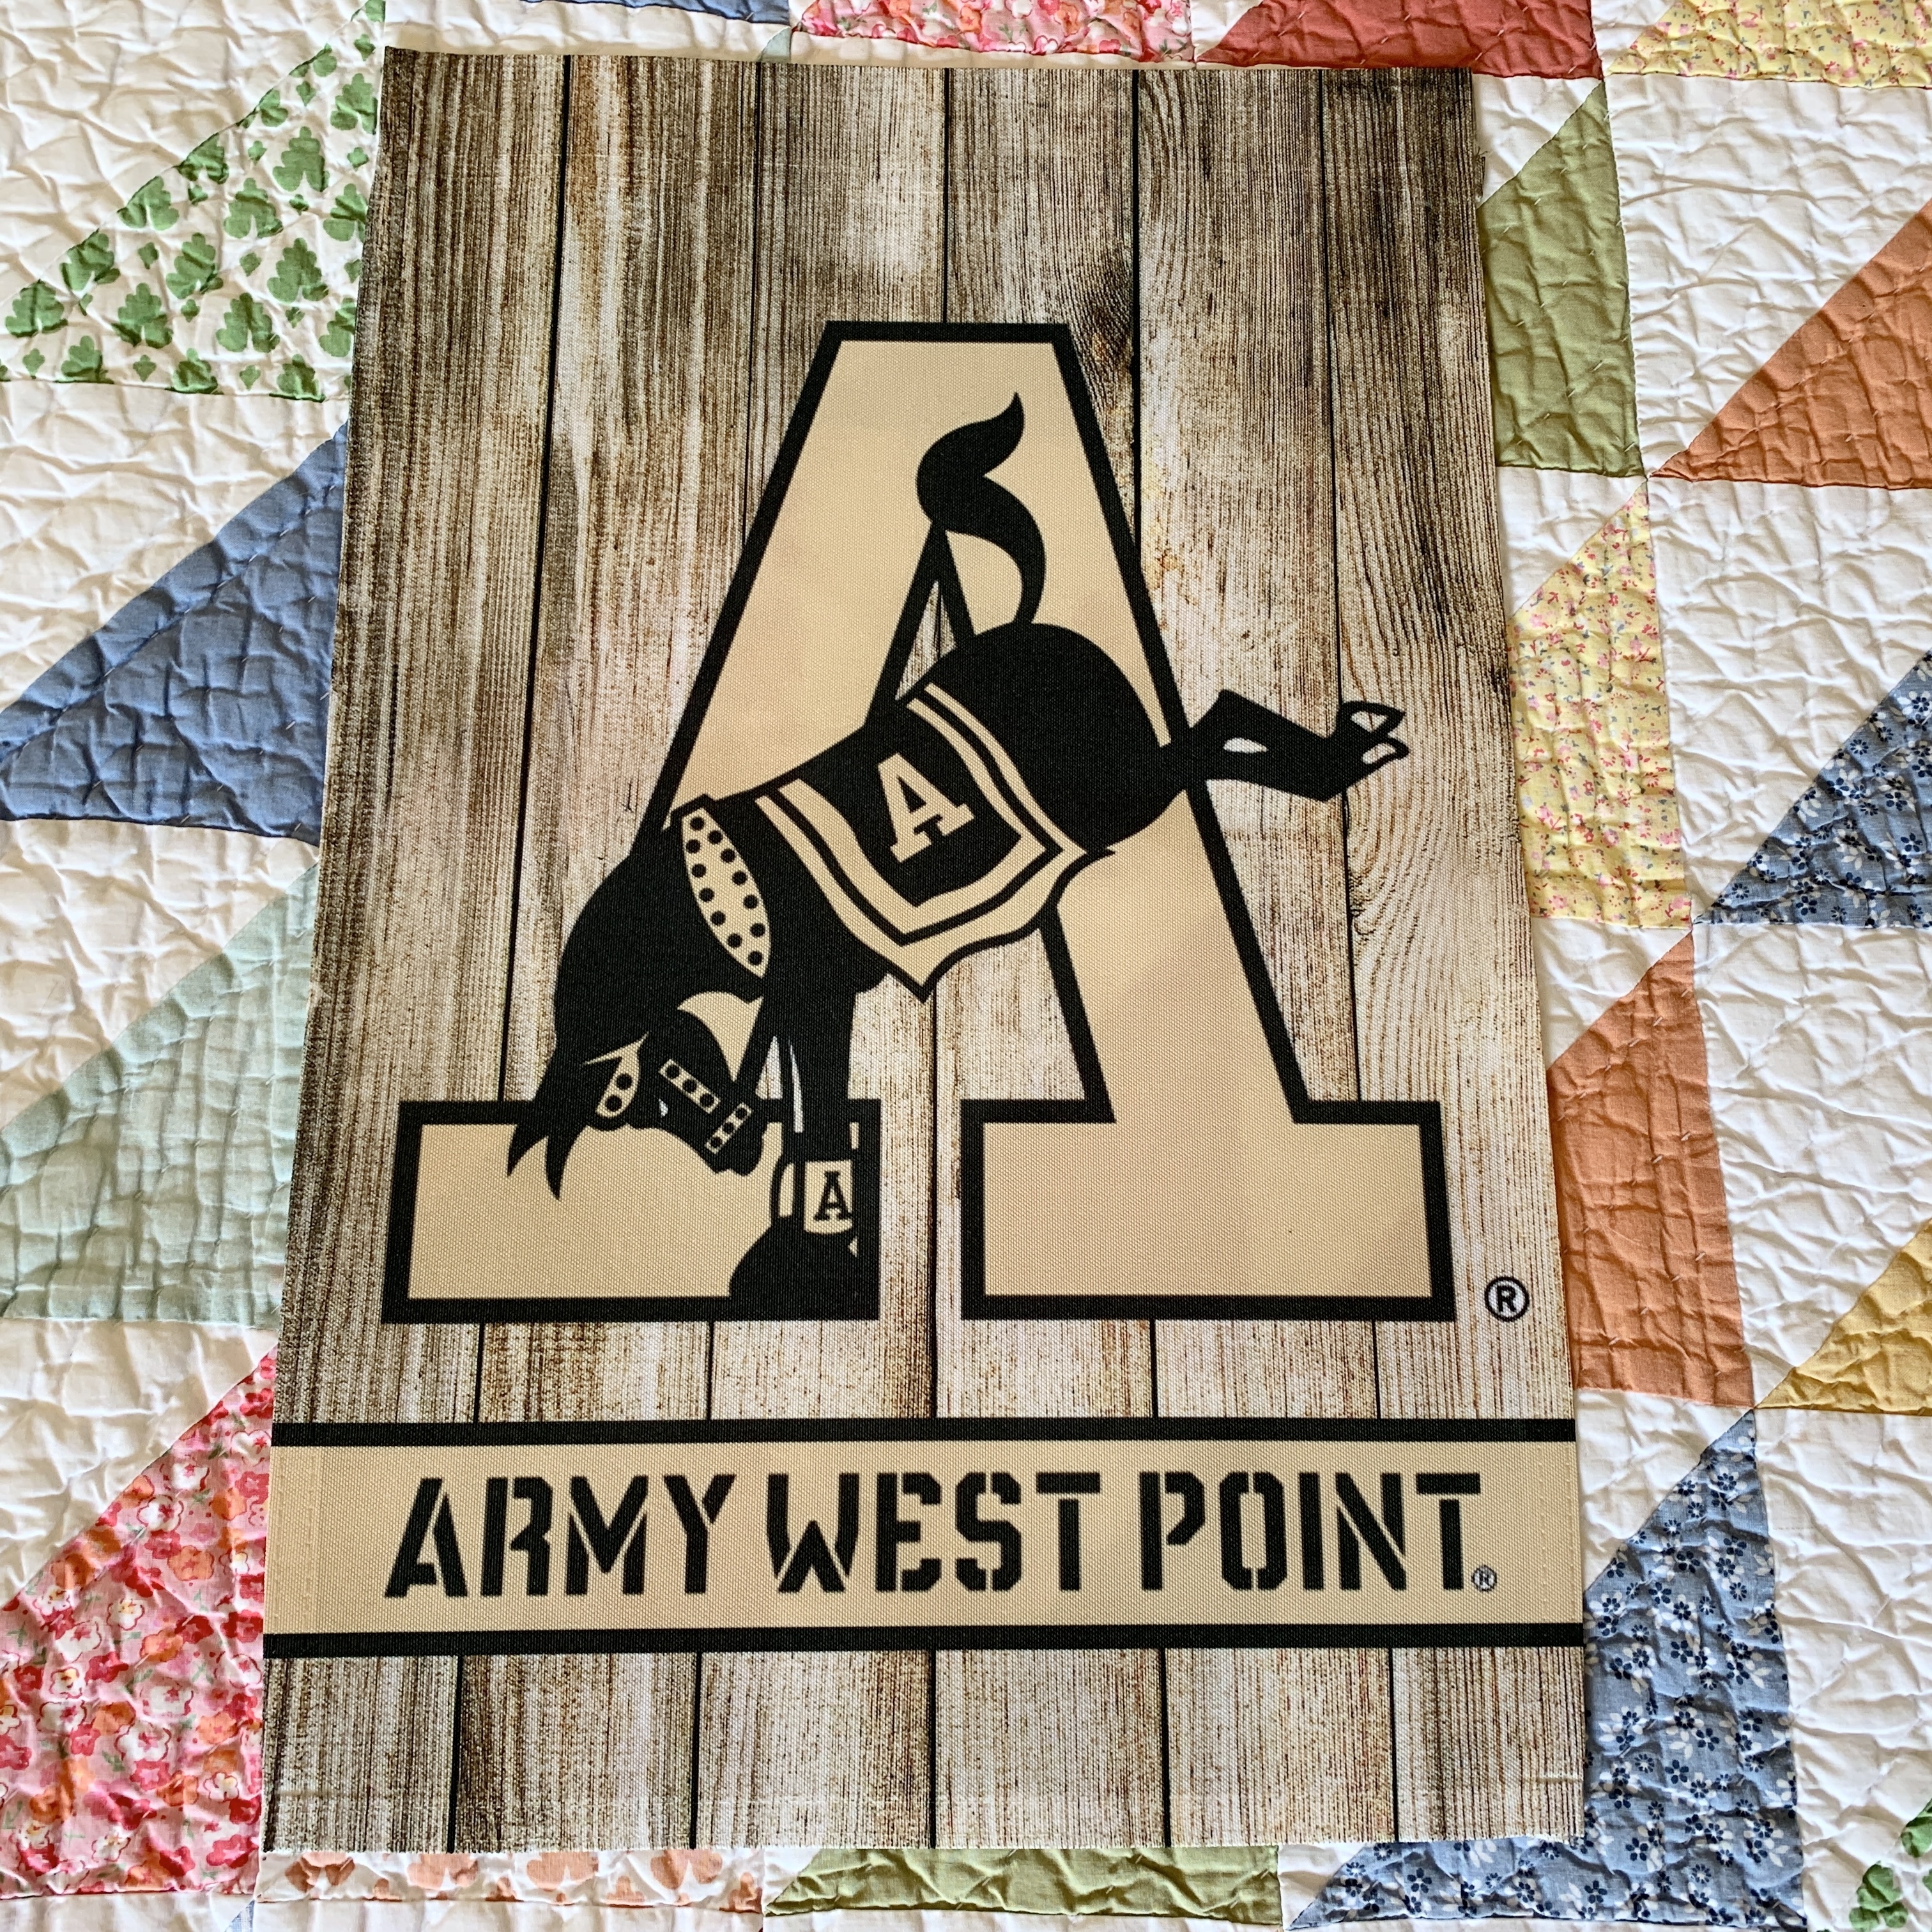 USMA Full Length Black Apron Army West Point Word Mark 